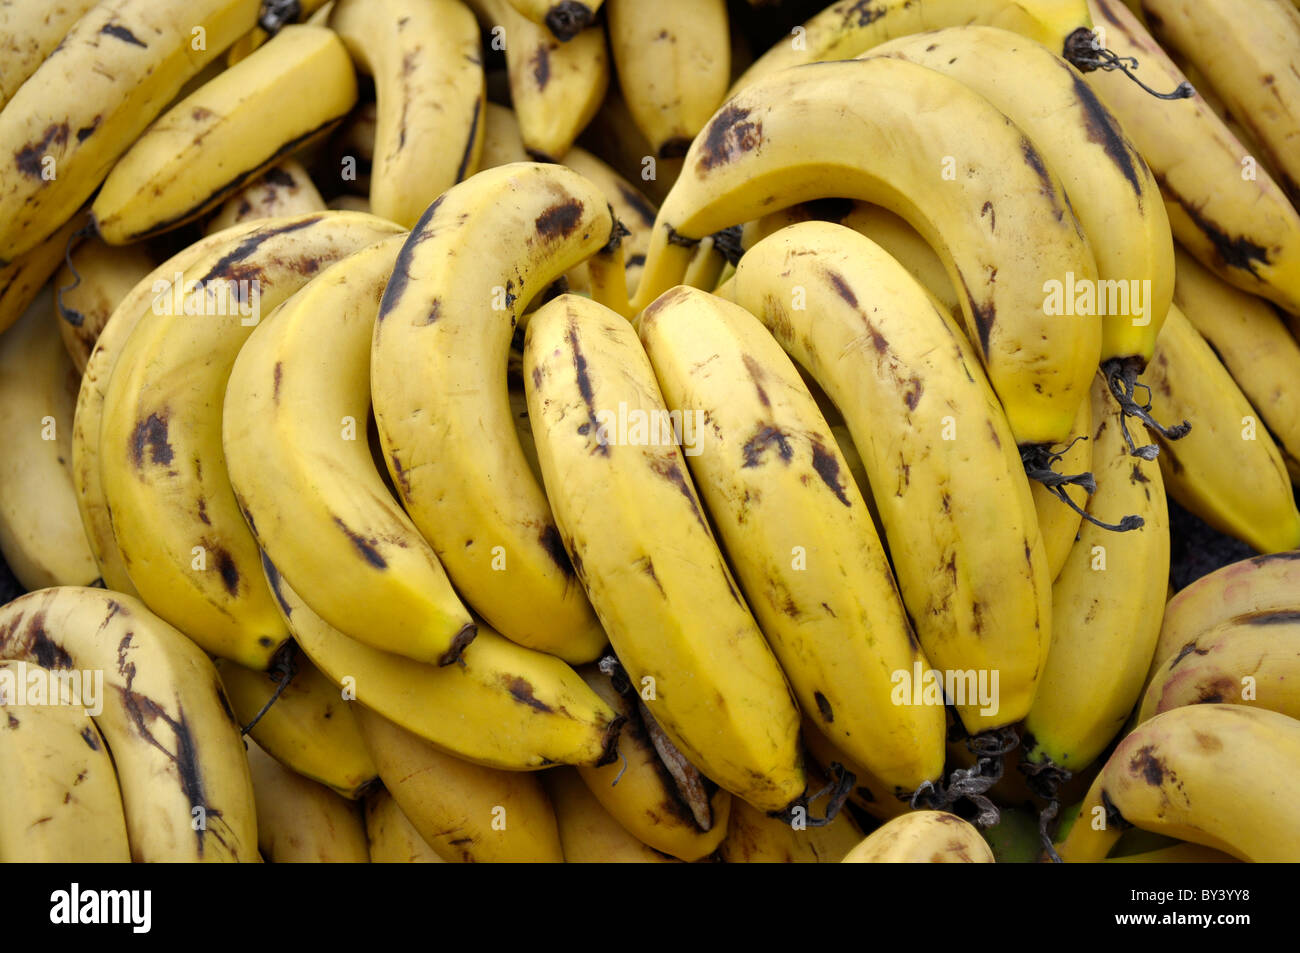 Banana shrub -Fotos und -Bildmaterial in hoher Auflösung – Alamy